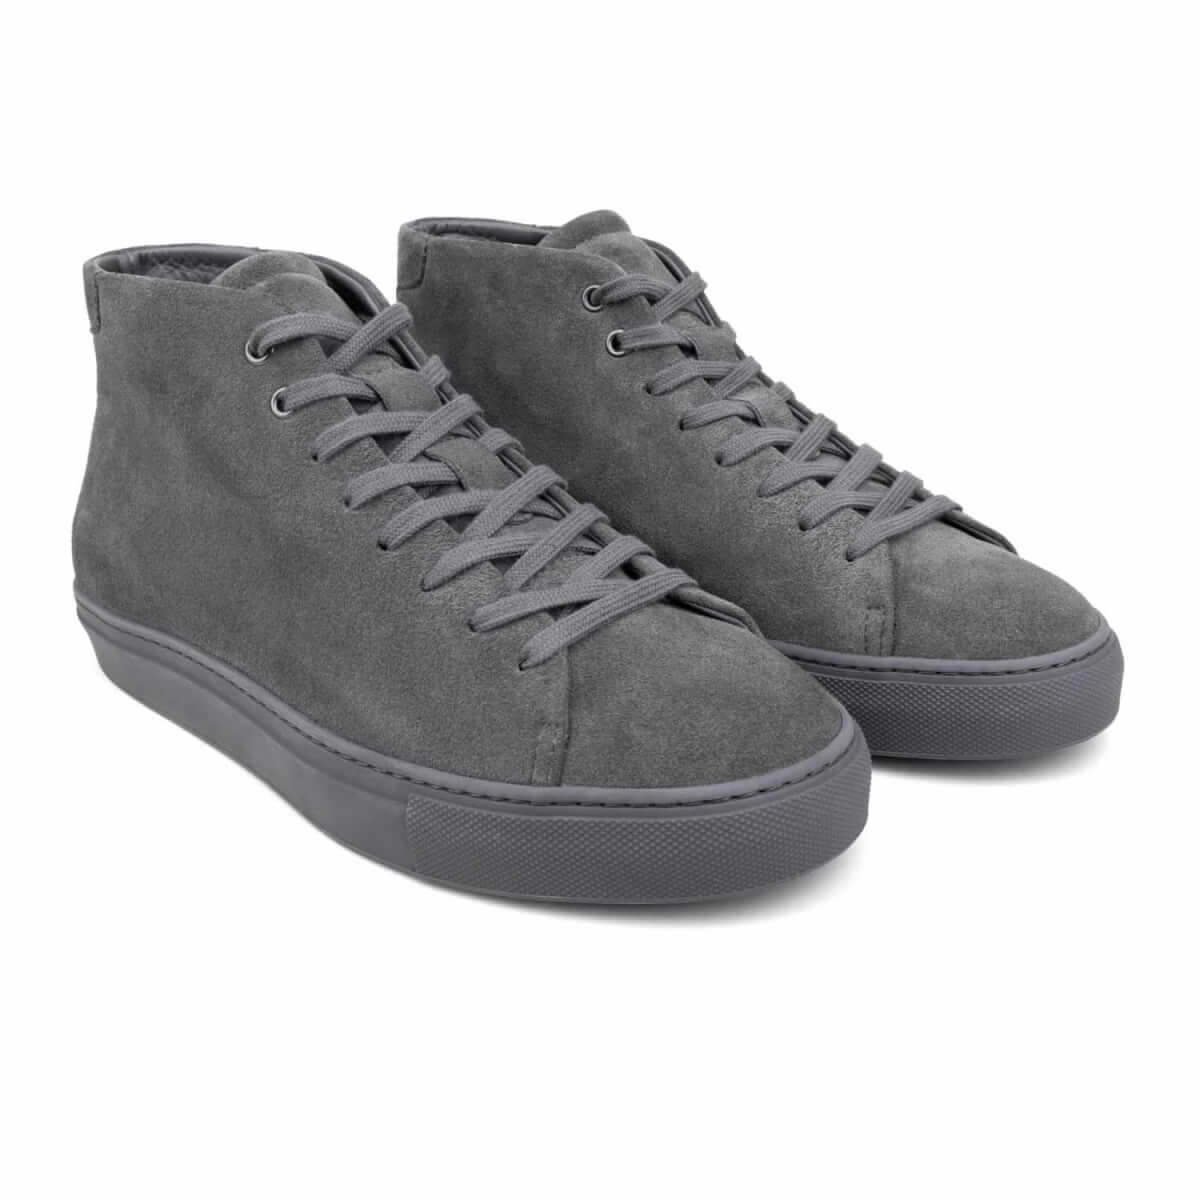 Dark grey suede leather high top sneakers